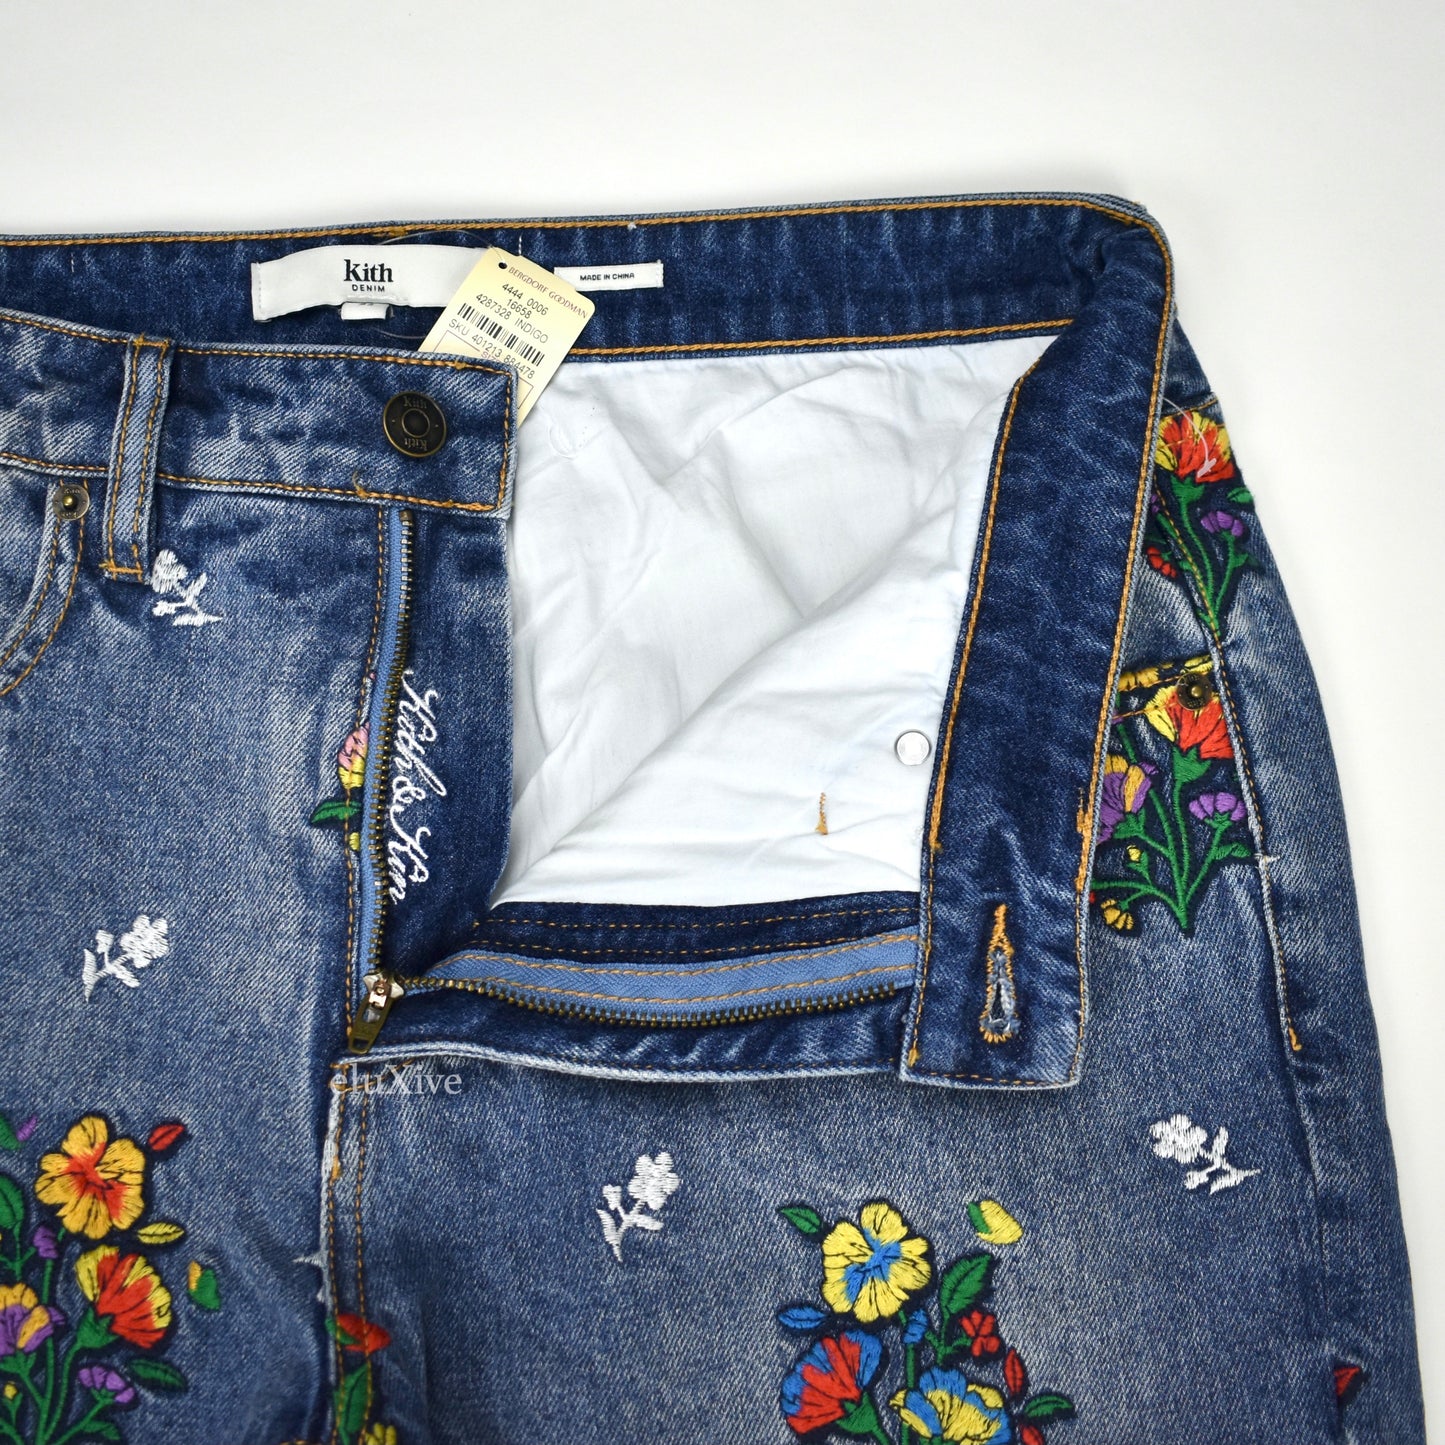 Kith - Floral Embroidered Denim Varick Jeans